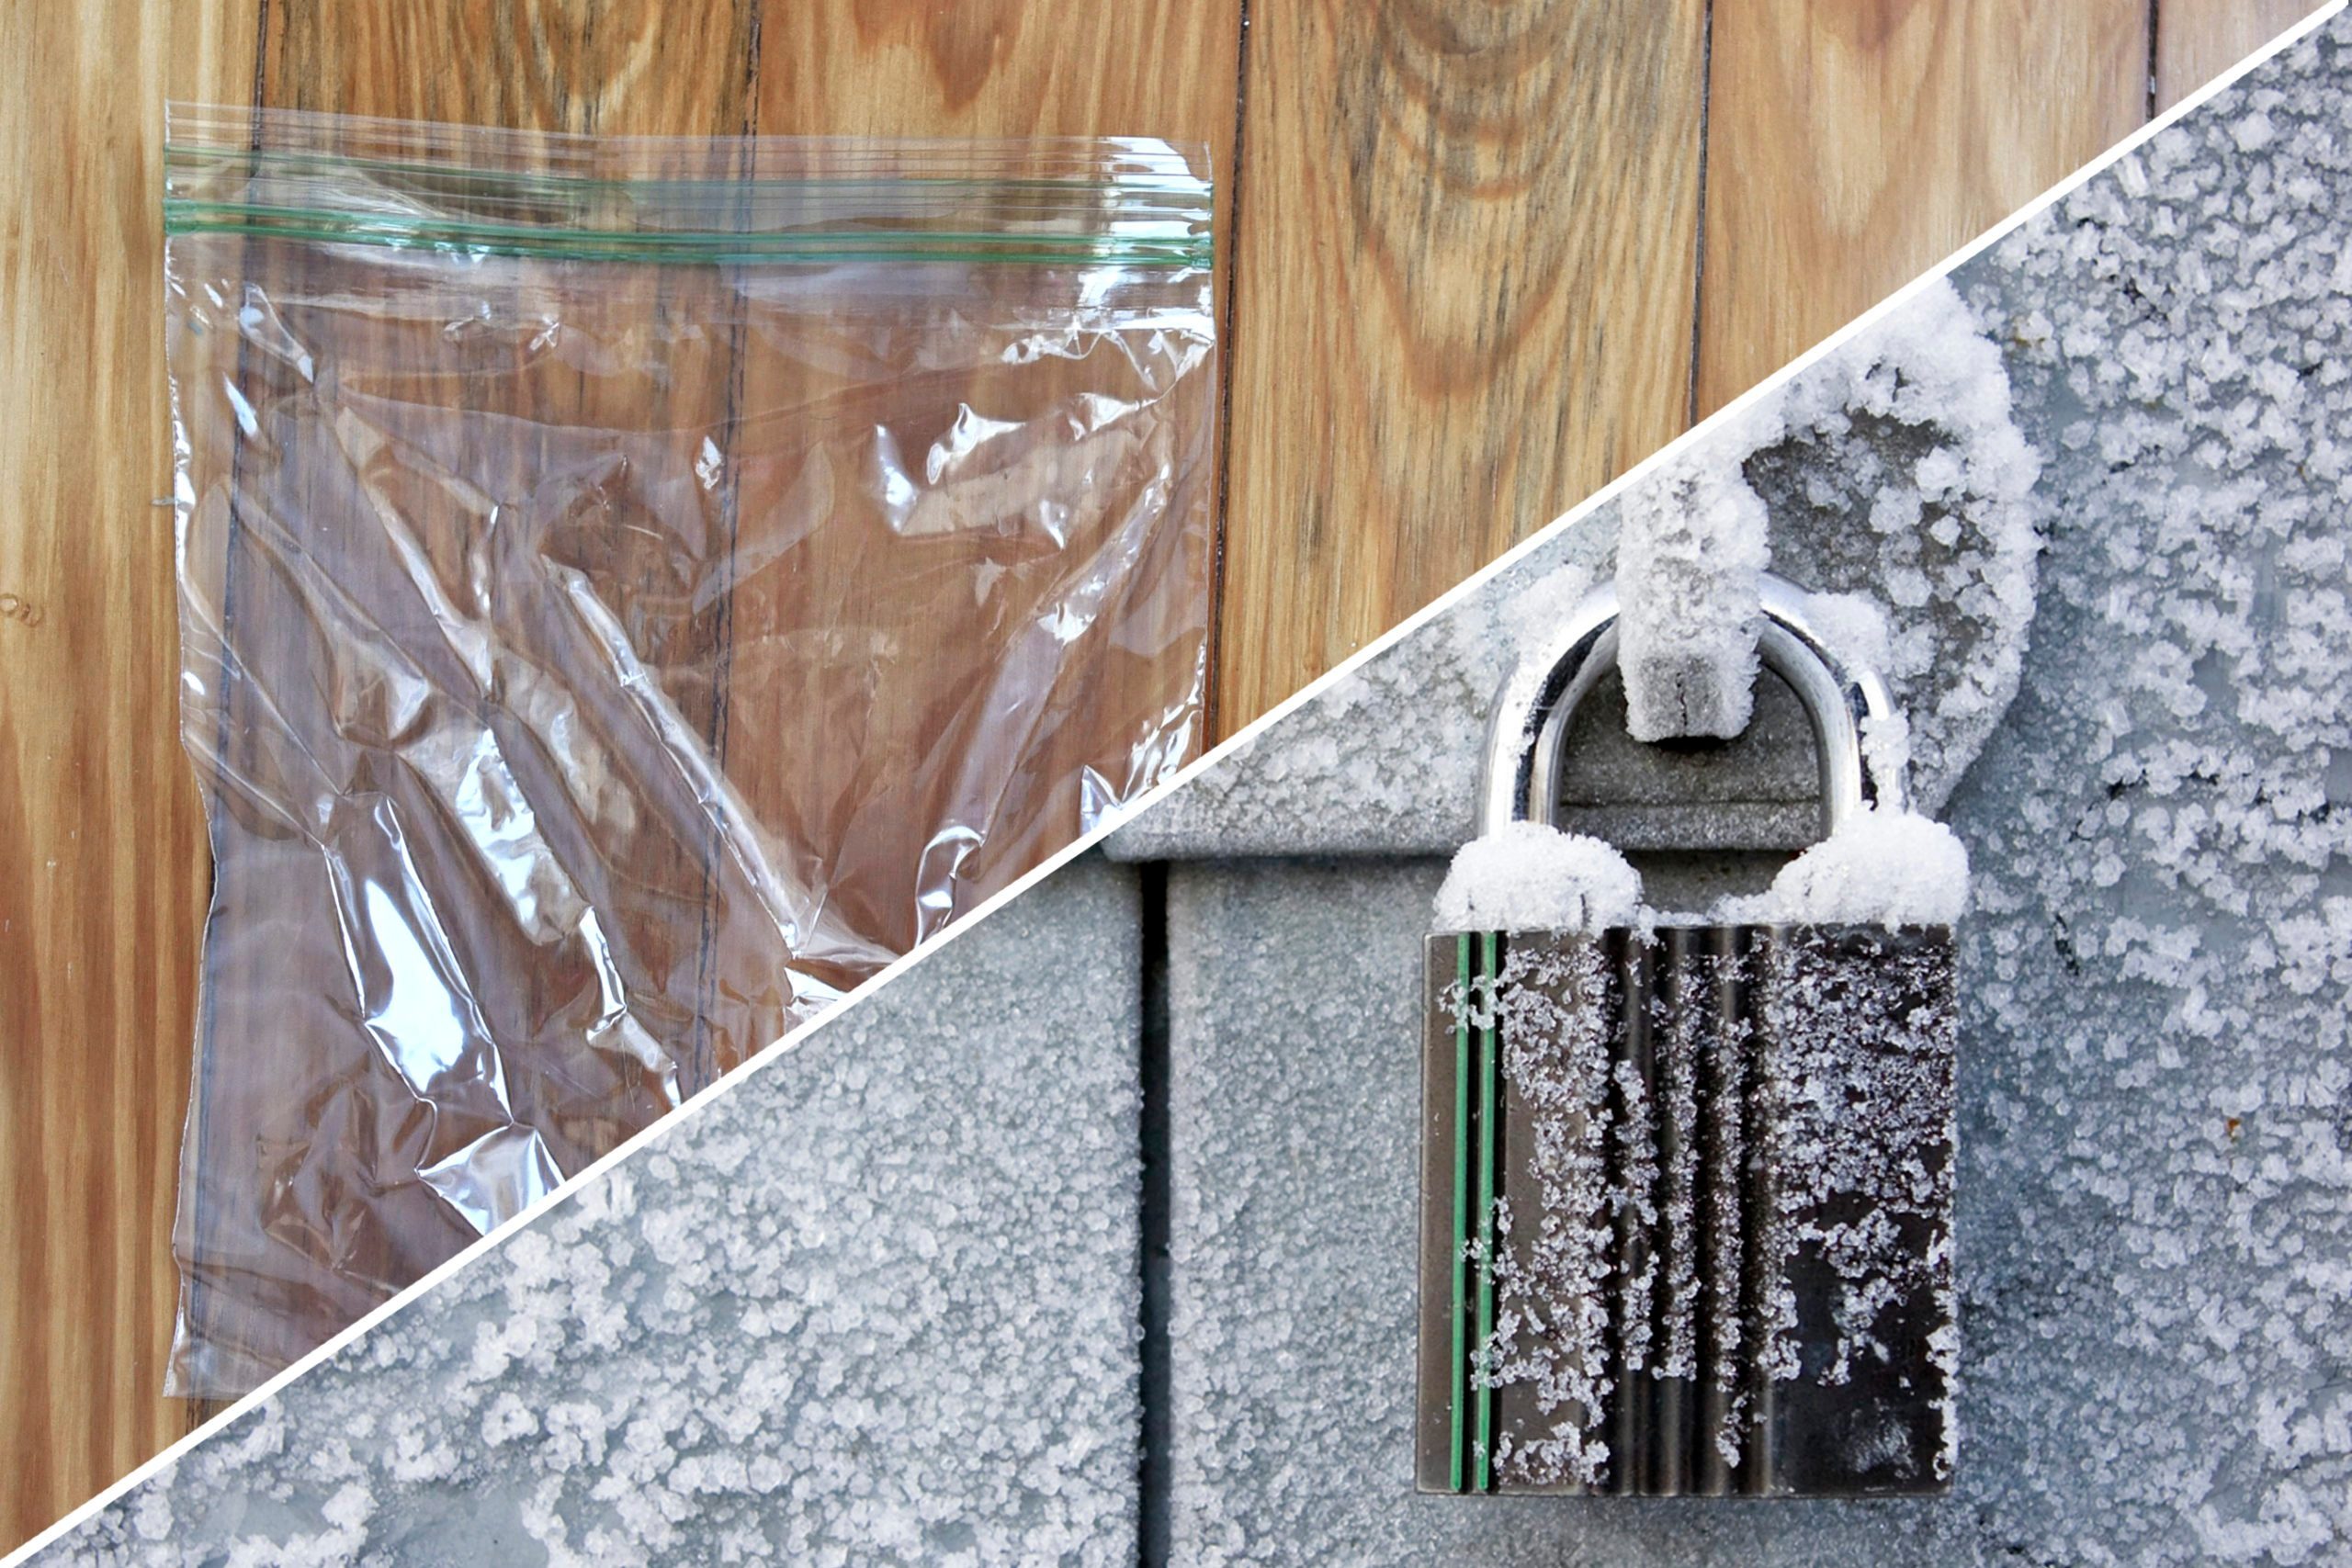 resealable bags - reusable plastic bag frozen padlock